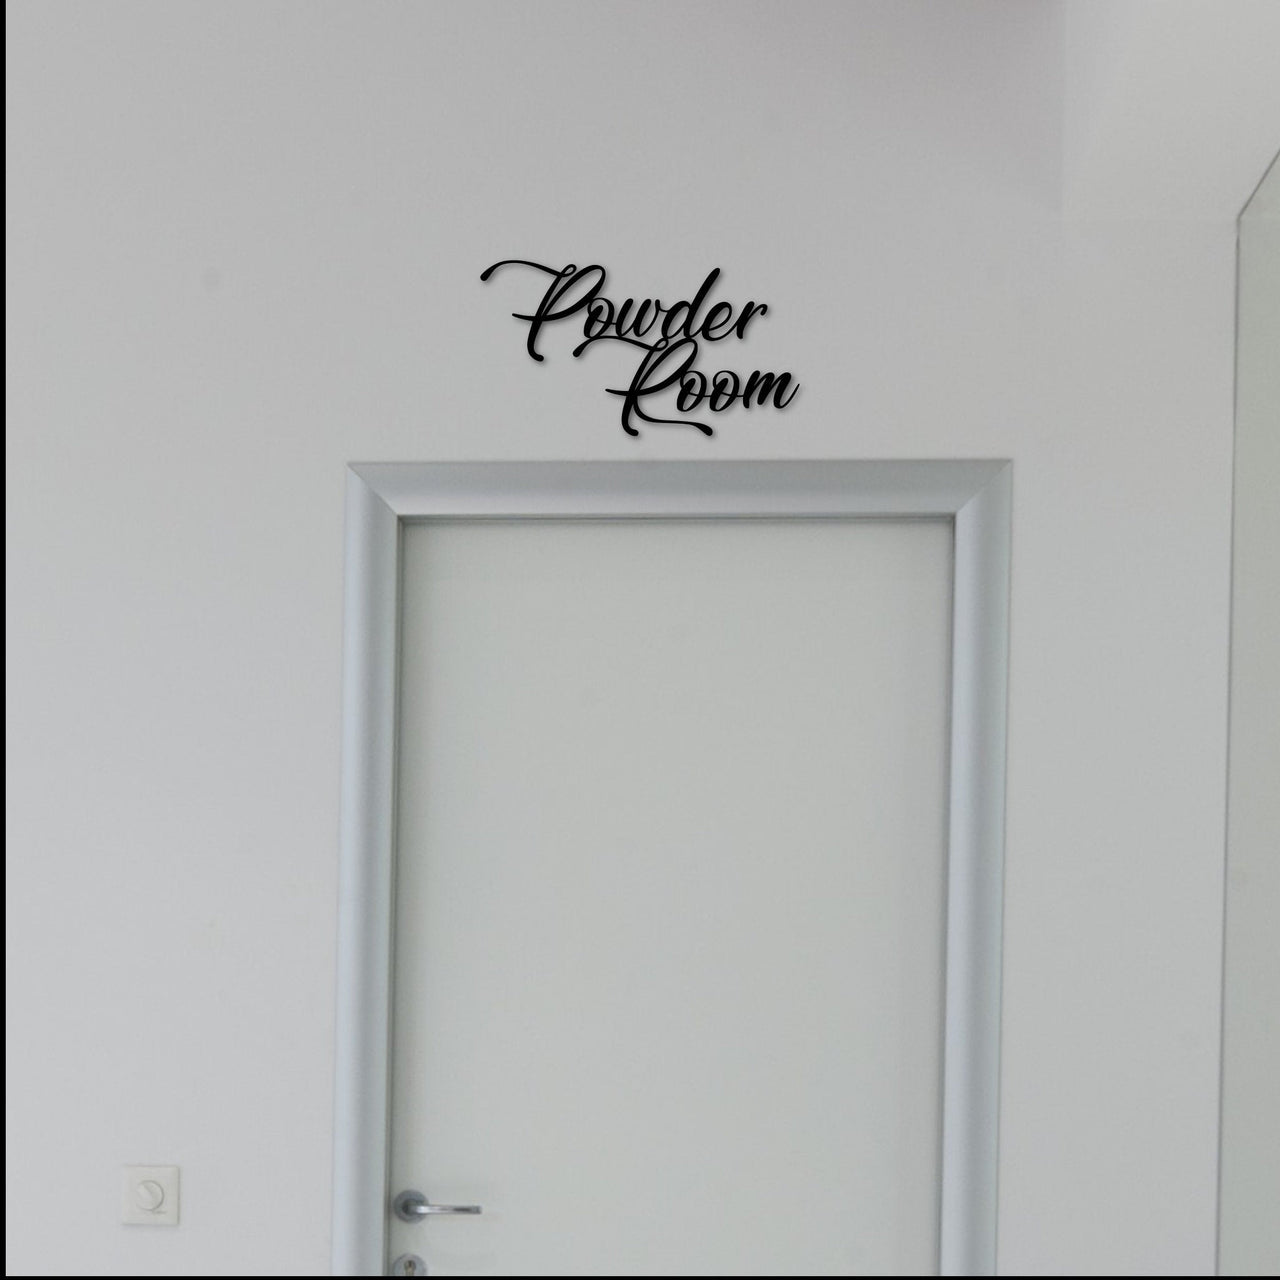 Powder Room Metal Sign | Decorative Bathroom Sign | Bathroom Decor for Guest Bathroom or Master Bathroom | Metal Word Art | Wash Room Decor